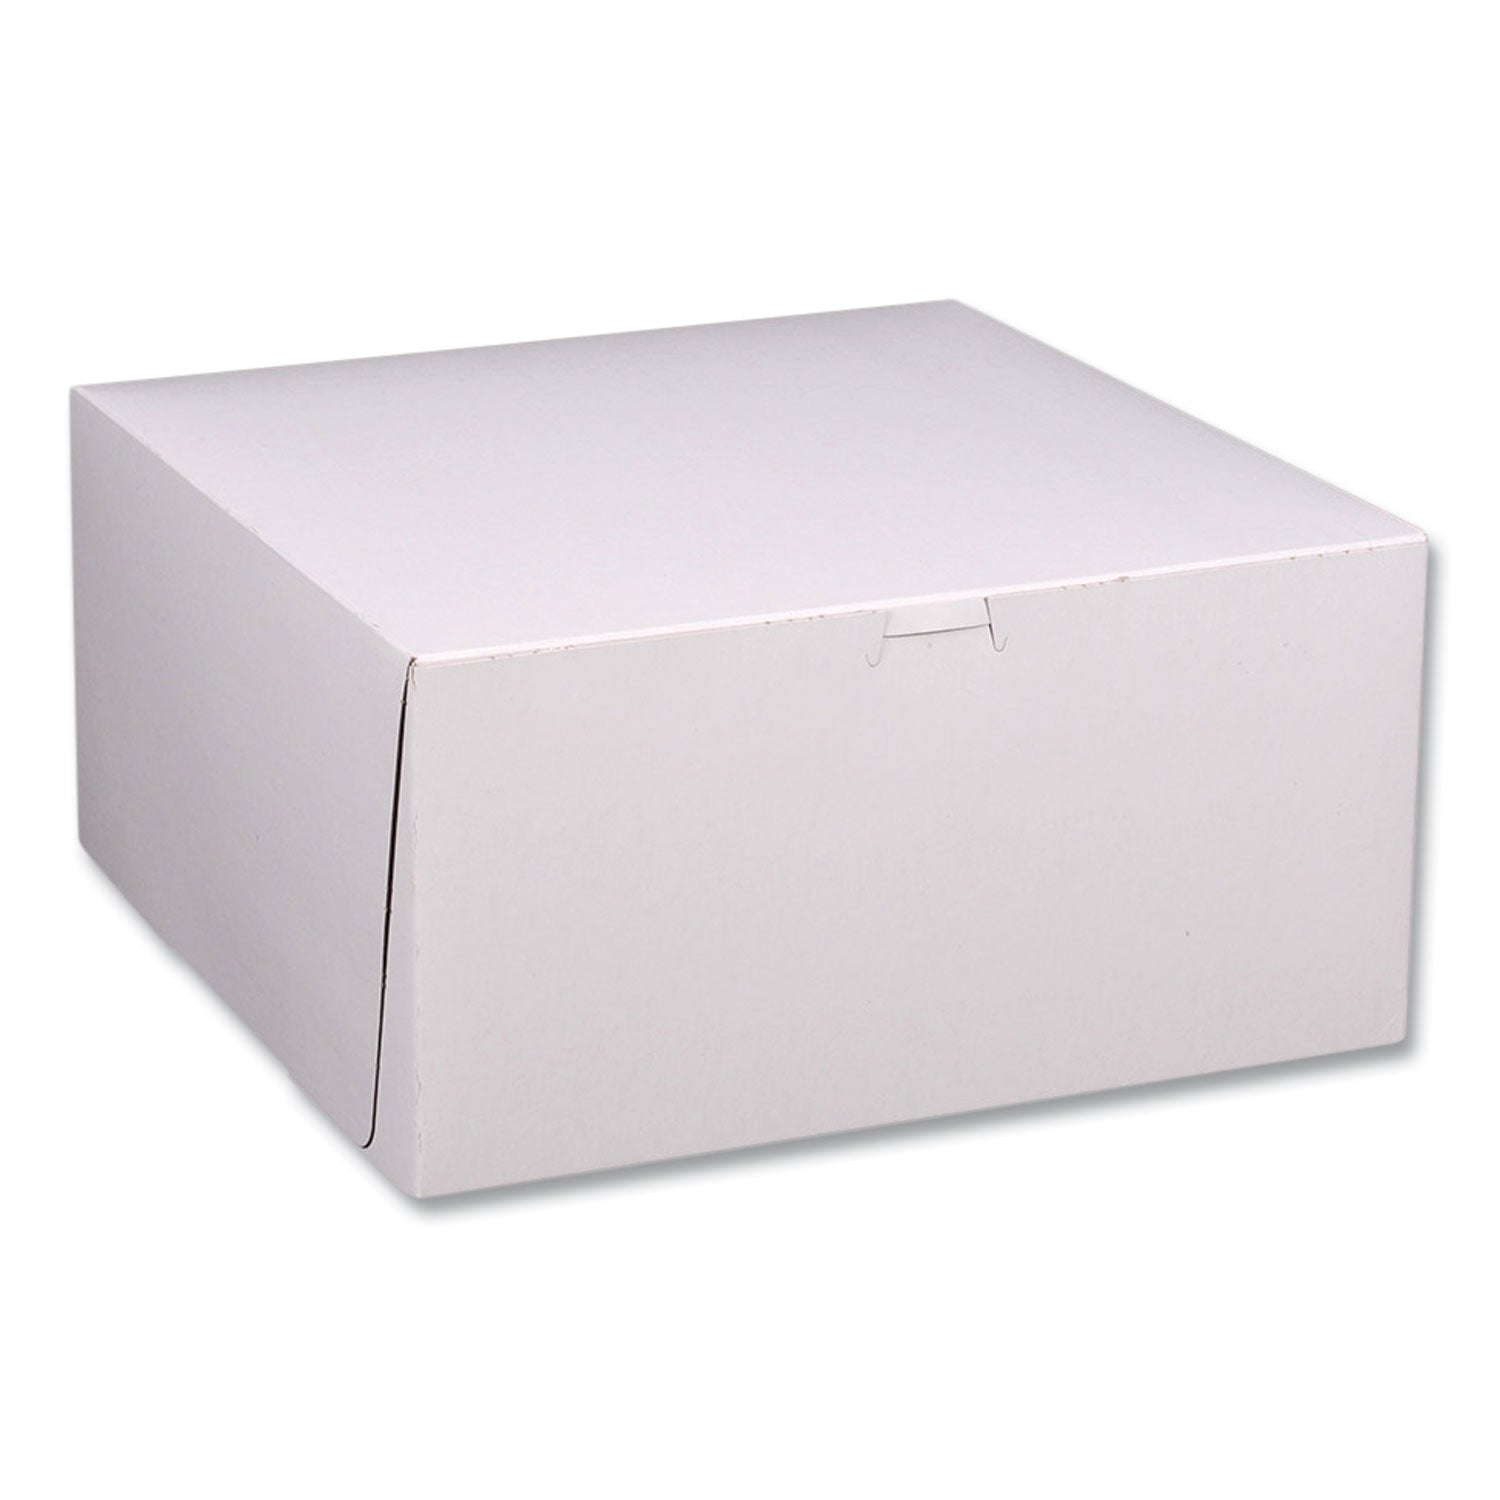 white-one-piece-non-window-bakery-boxes-standard-12-x-12-x-6-white-kraft-paper-50-bundle_sch1589 - 1